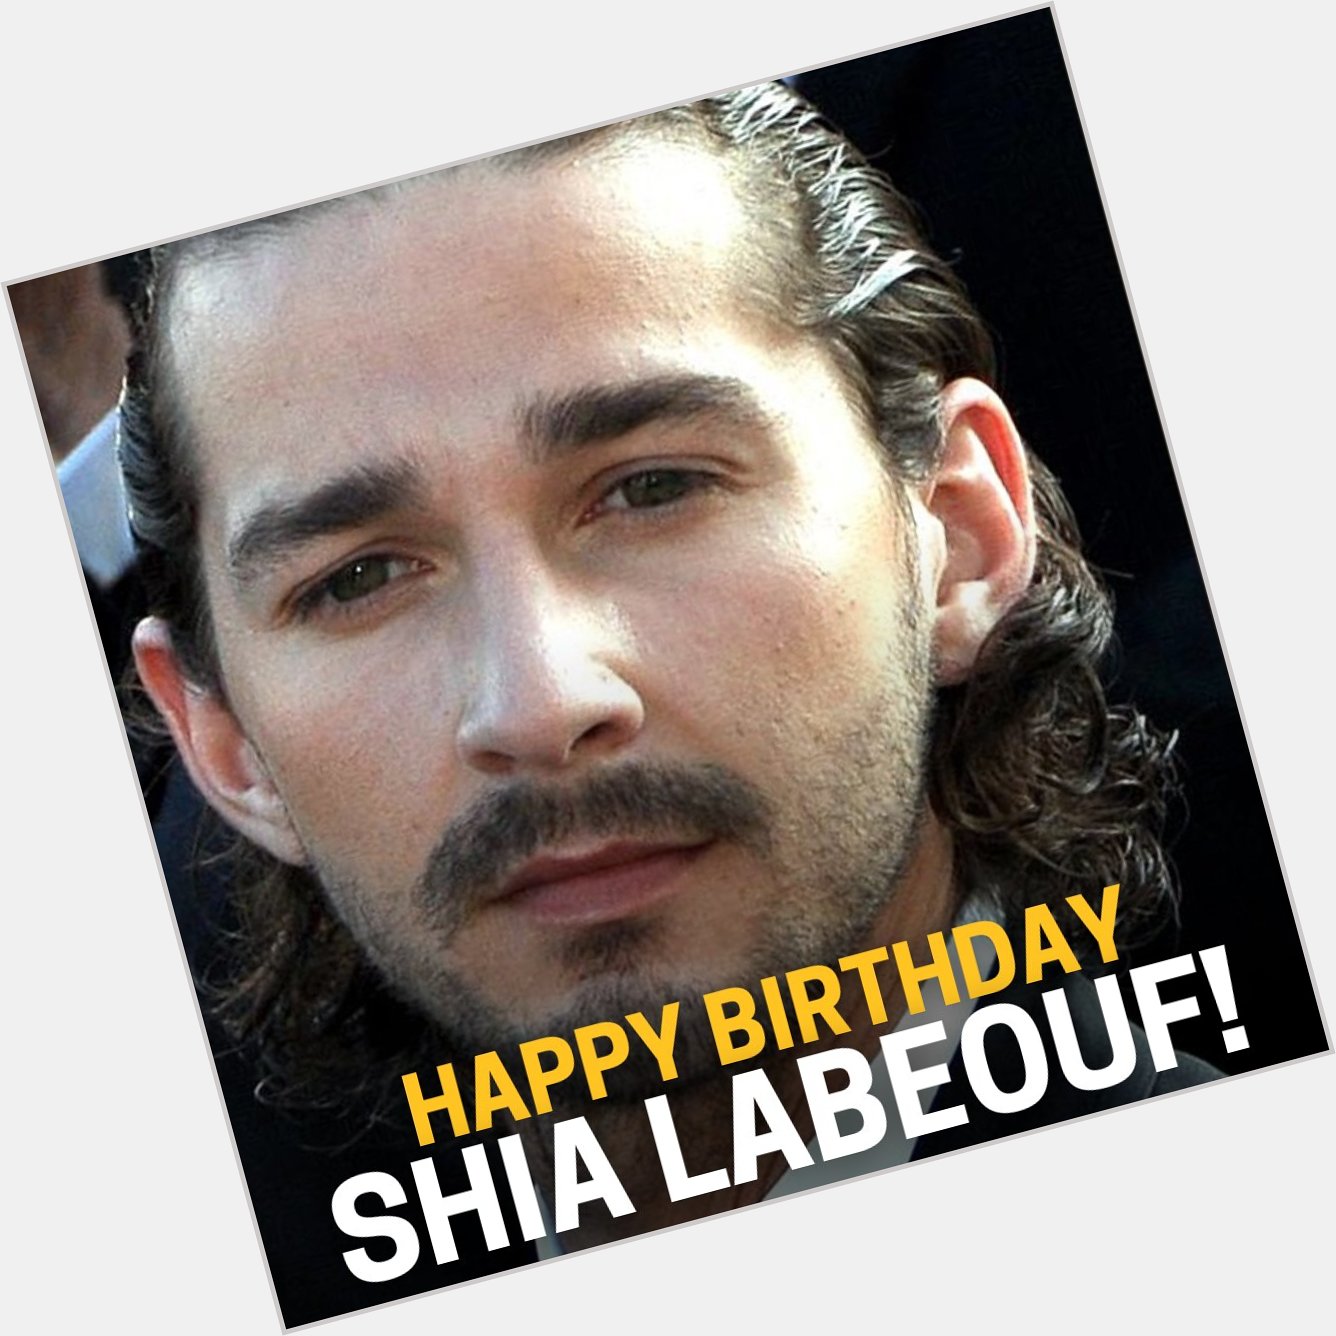 Happy birthday Shia LaBeouf! 